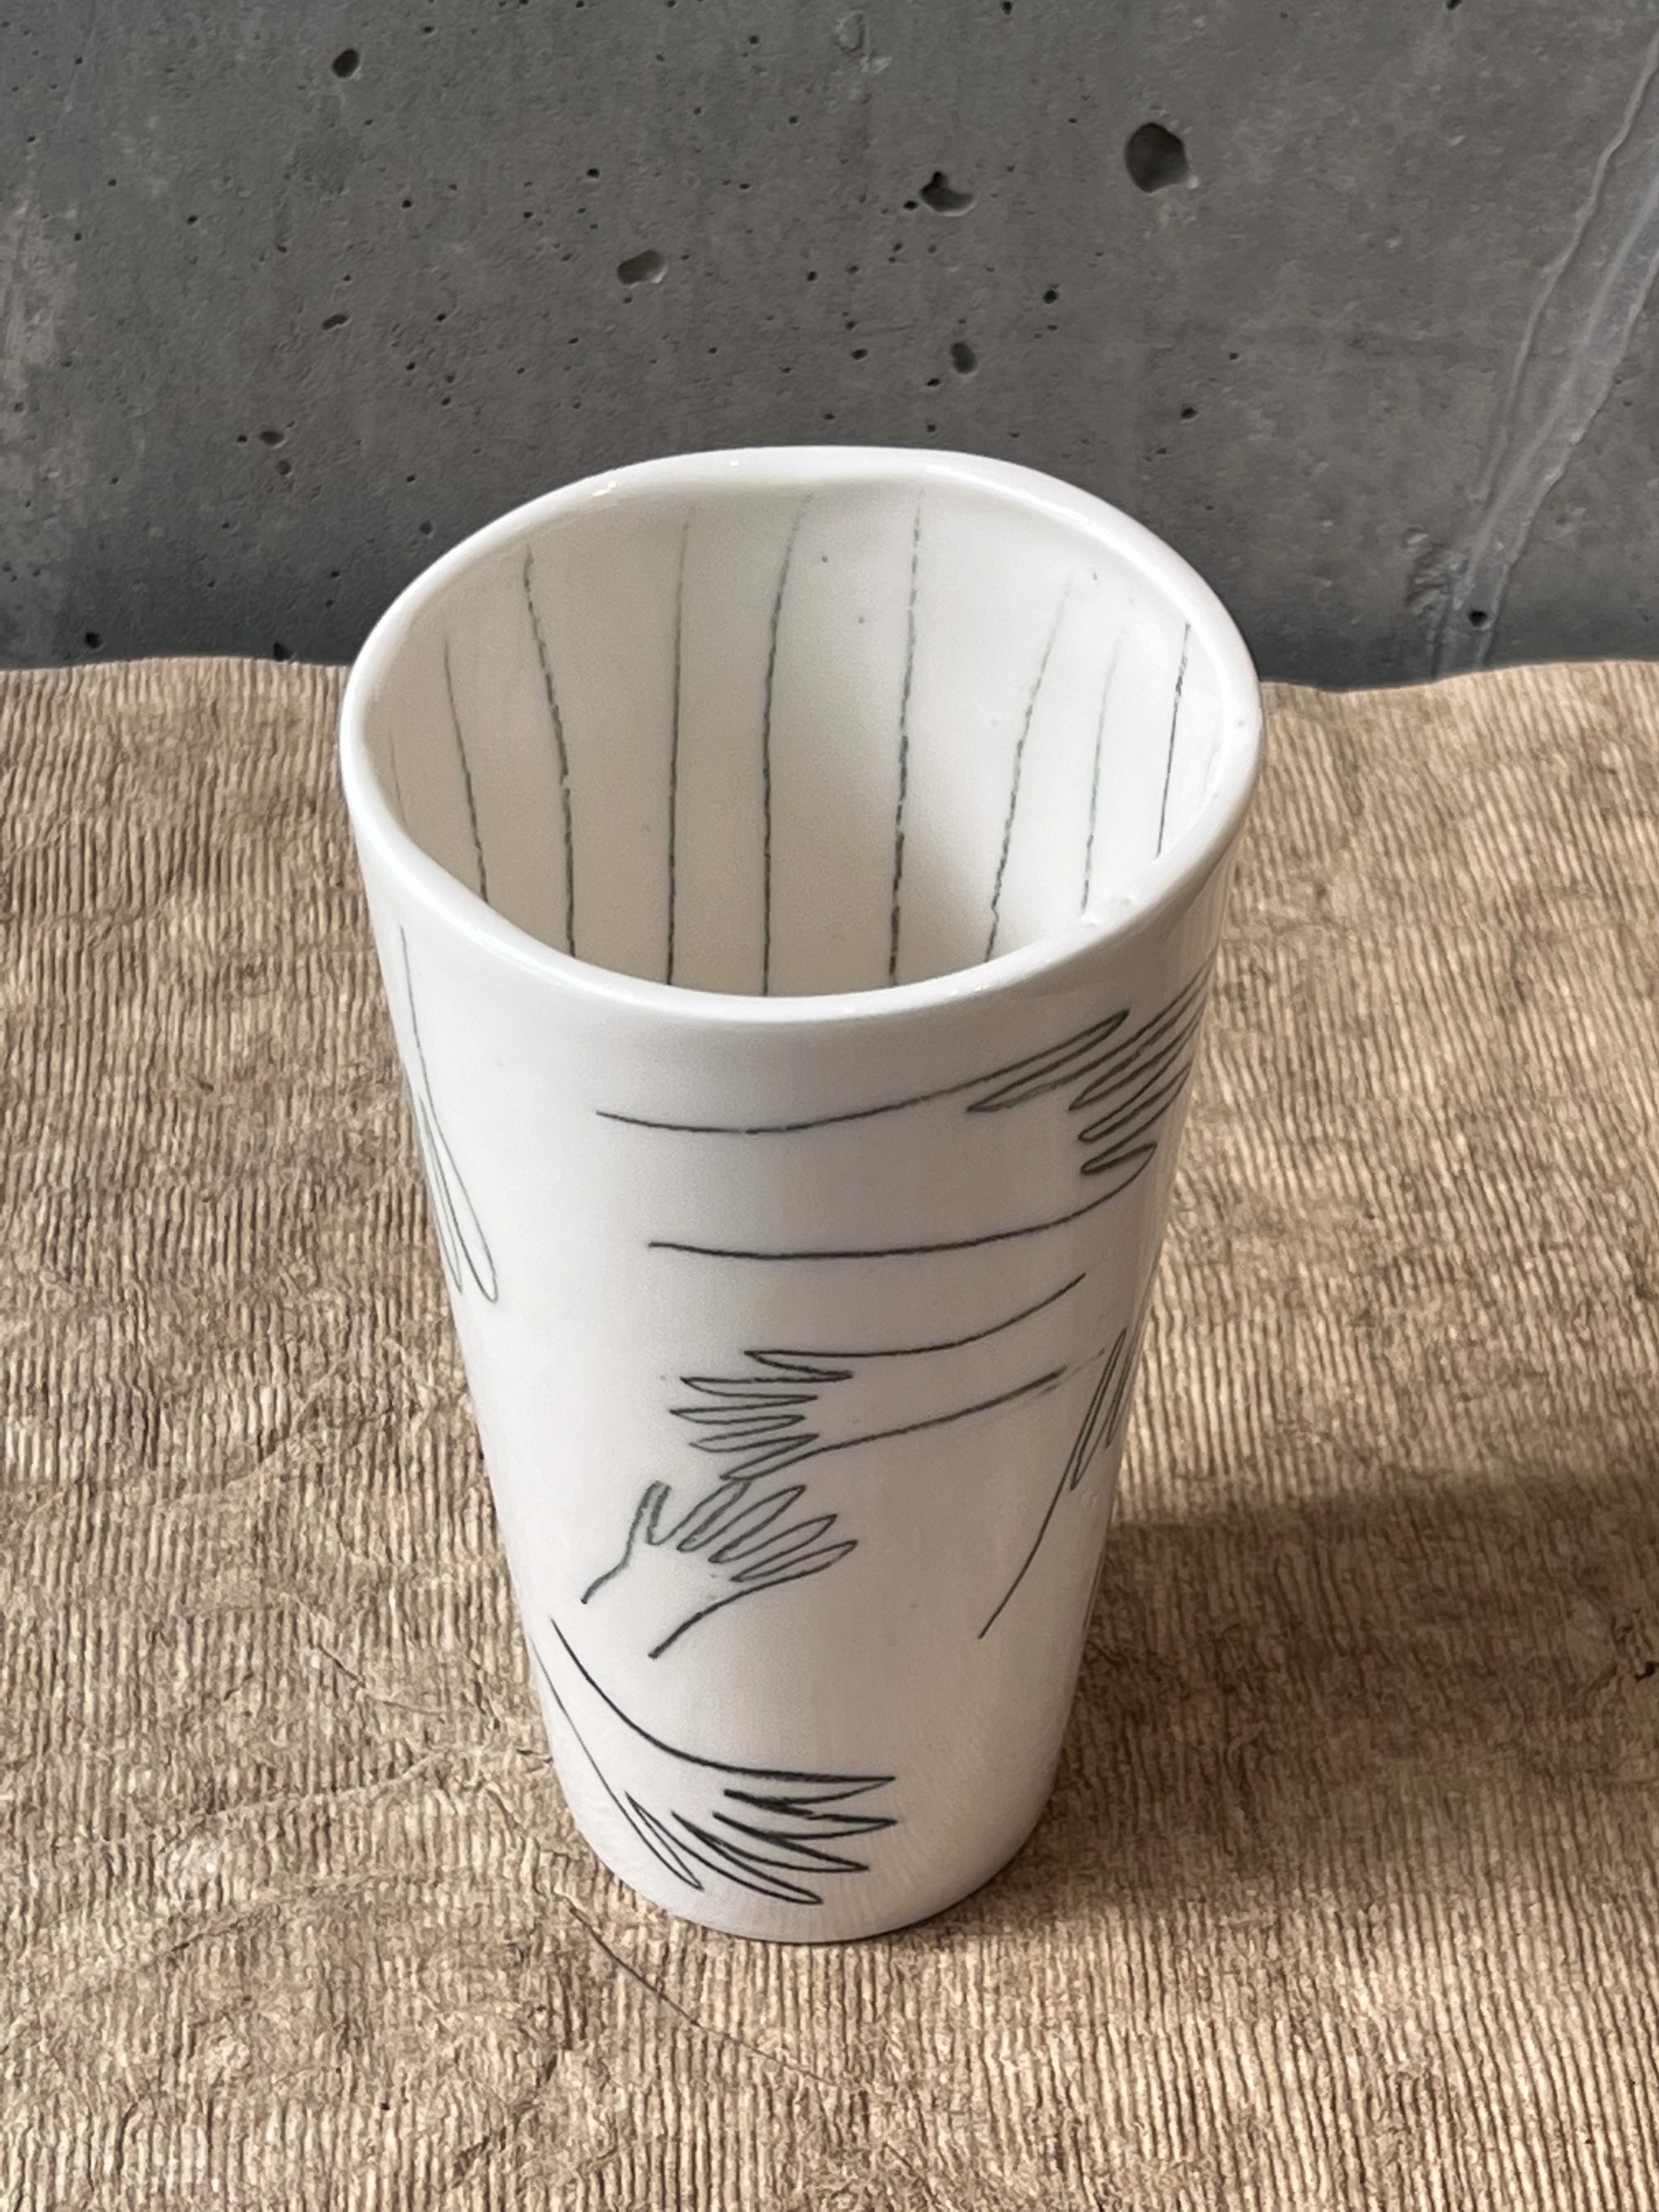 Lady Hummel Cup No. 1 by Sarah Hummel Jones